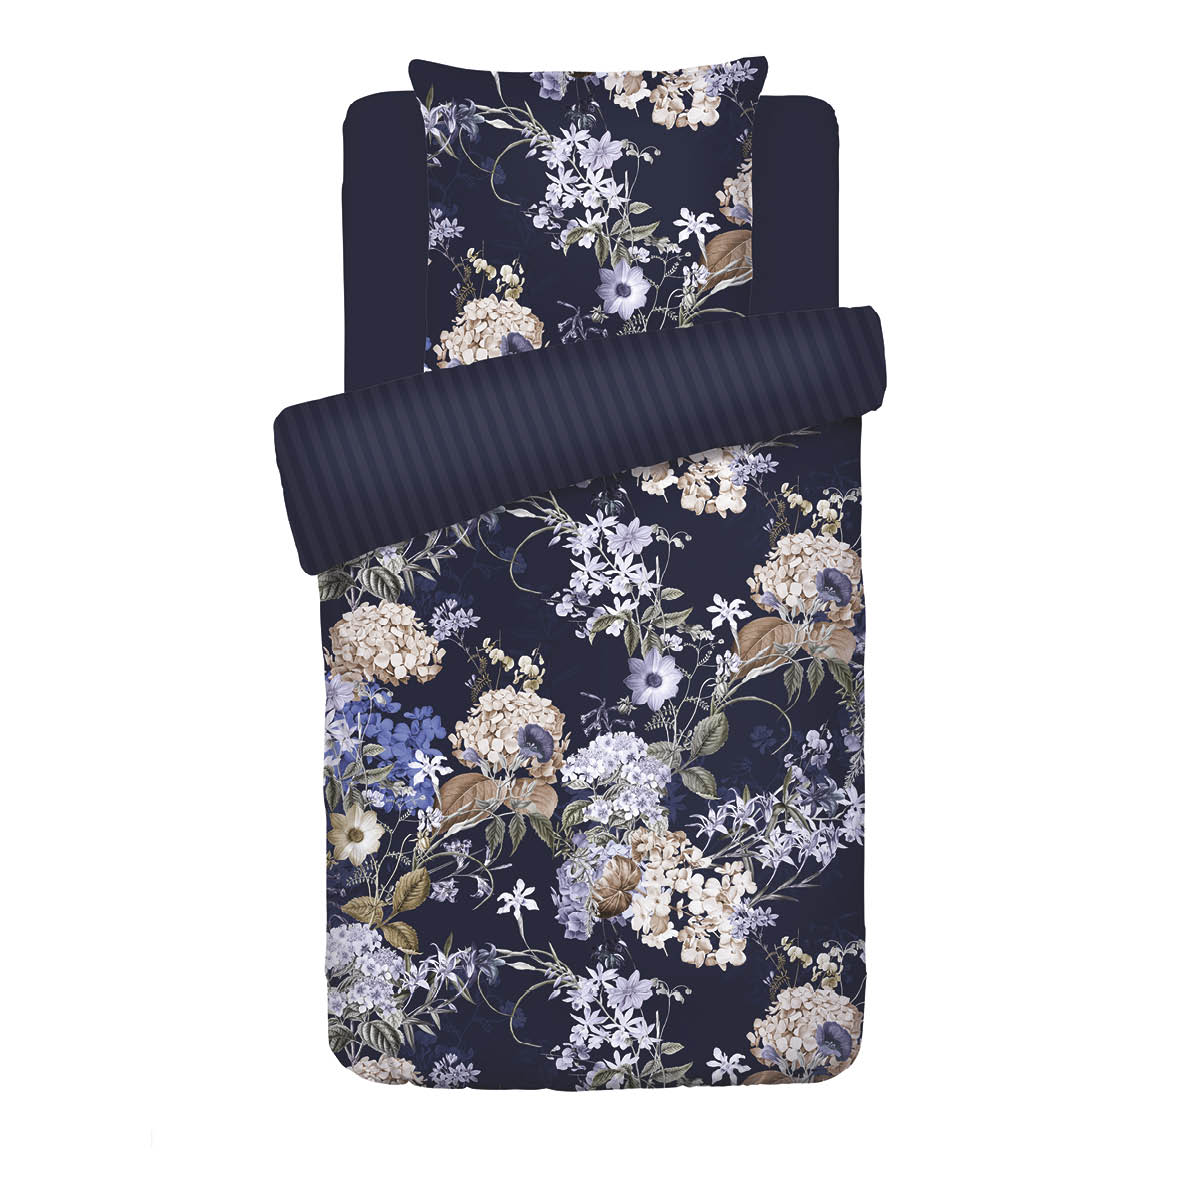 Duvet cover + pillowcase(s) cotton satin - Bouquet d'hortensias dark blue